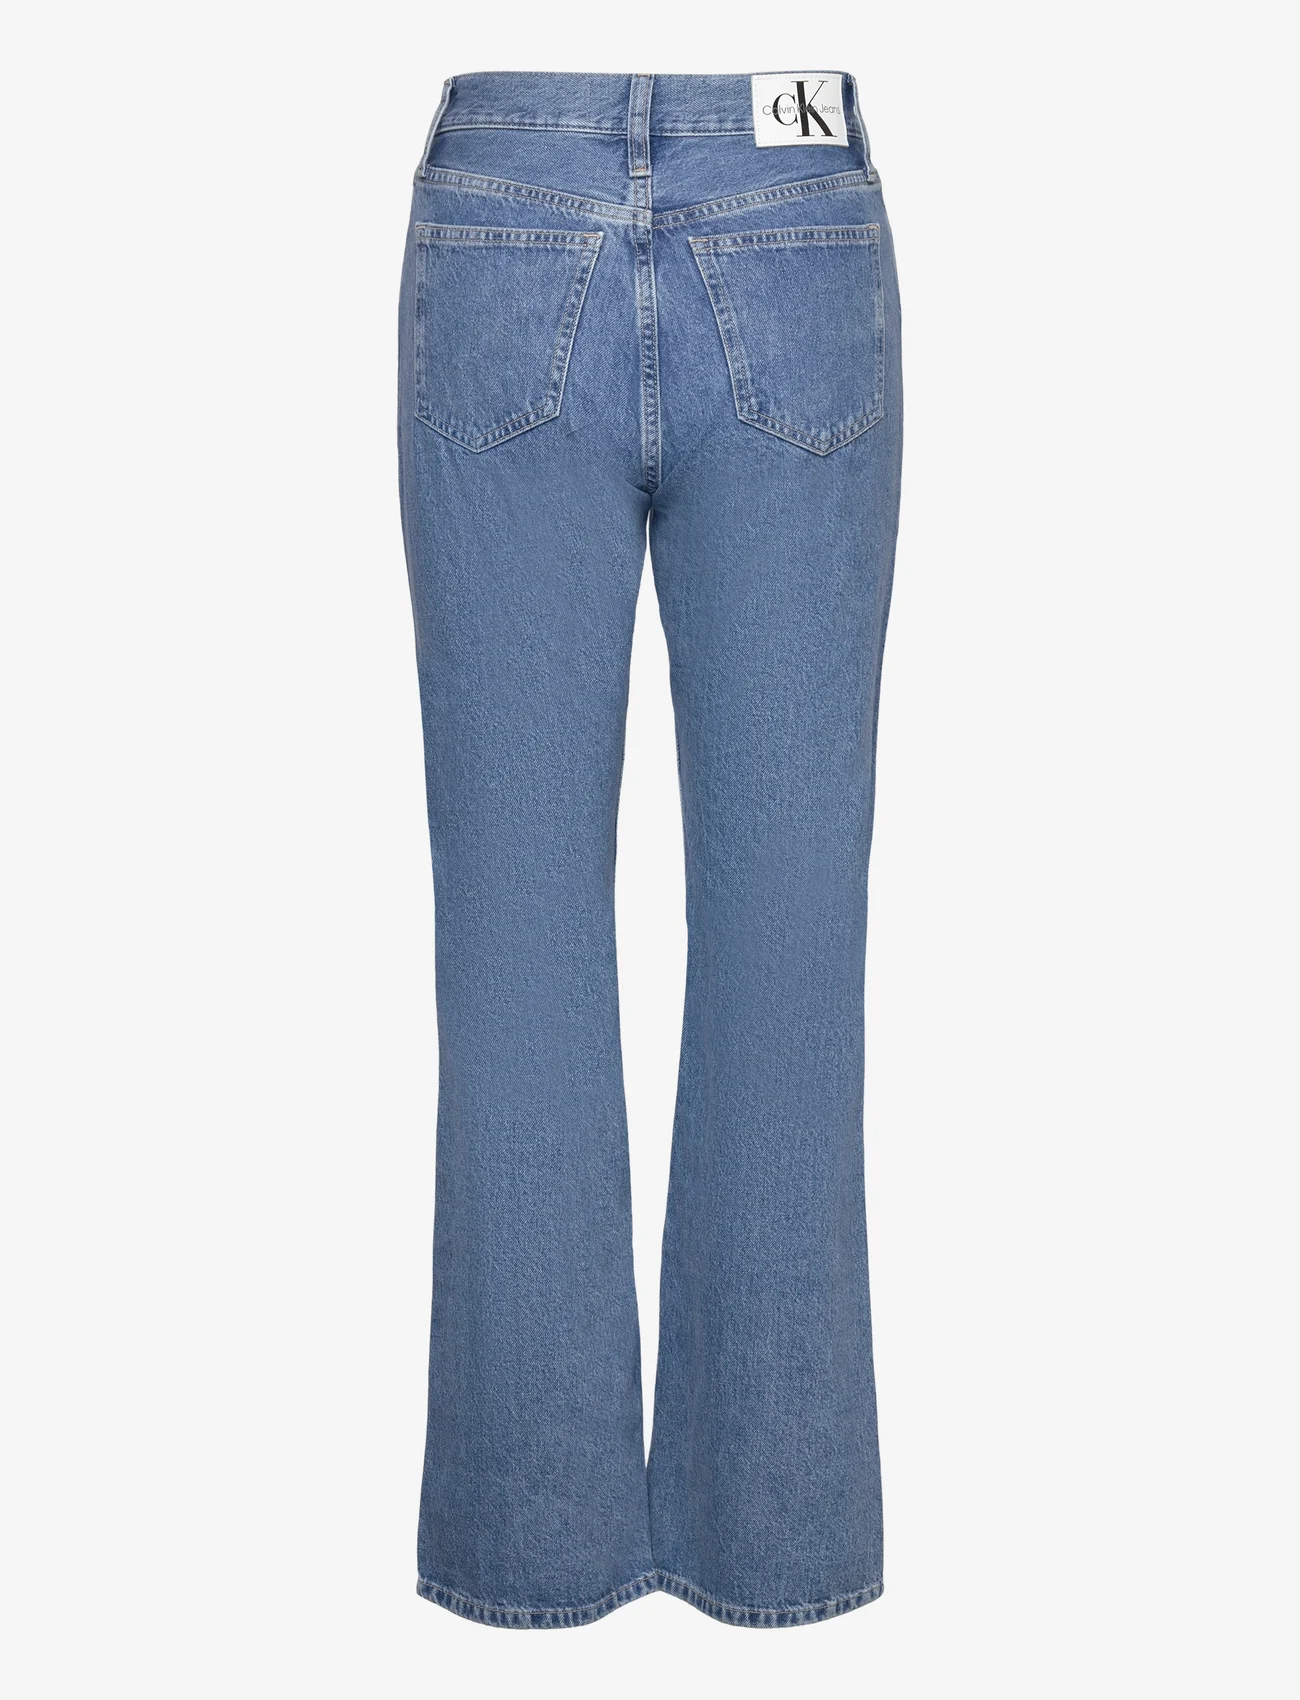 Calvin Klein Jeans - AUTHENTIC BOOTCUT - dżinsy typu bootcut - denim medium - 1